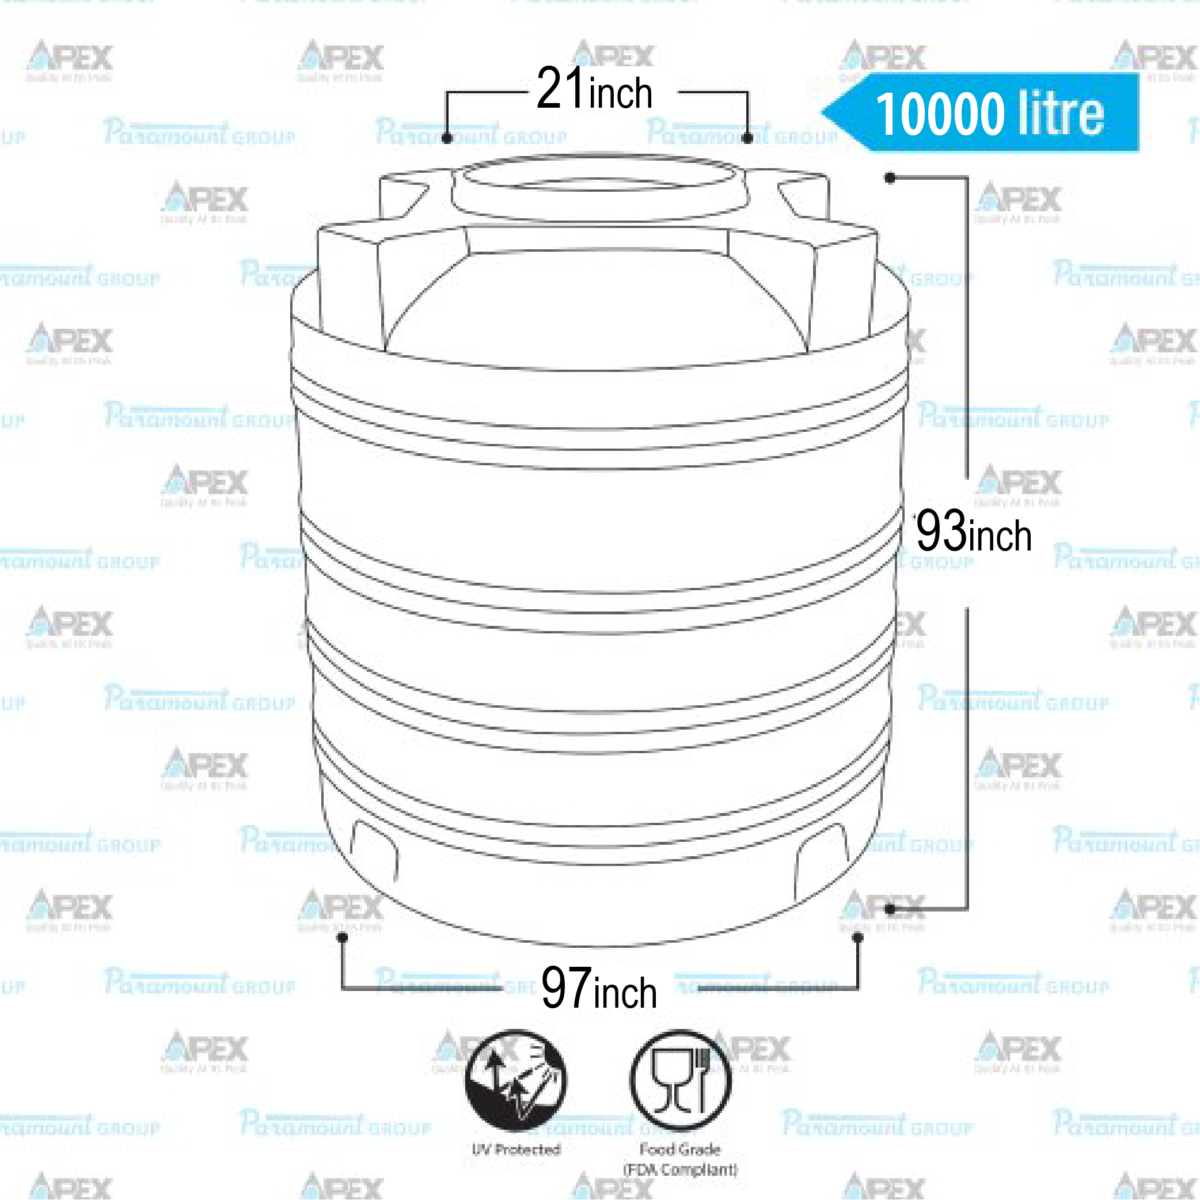 10000 Litre - Apex Water Tank - S Series